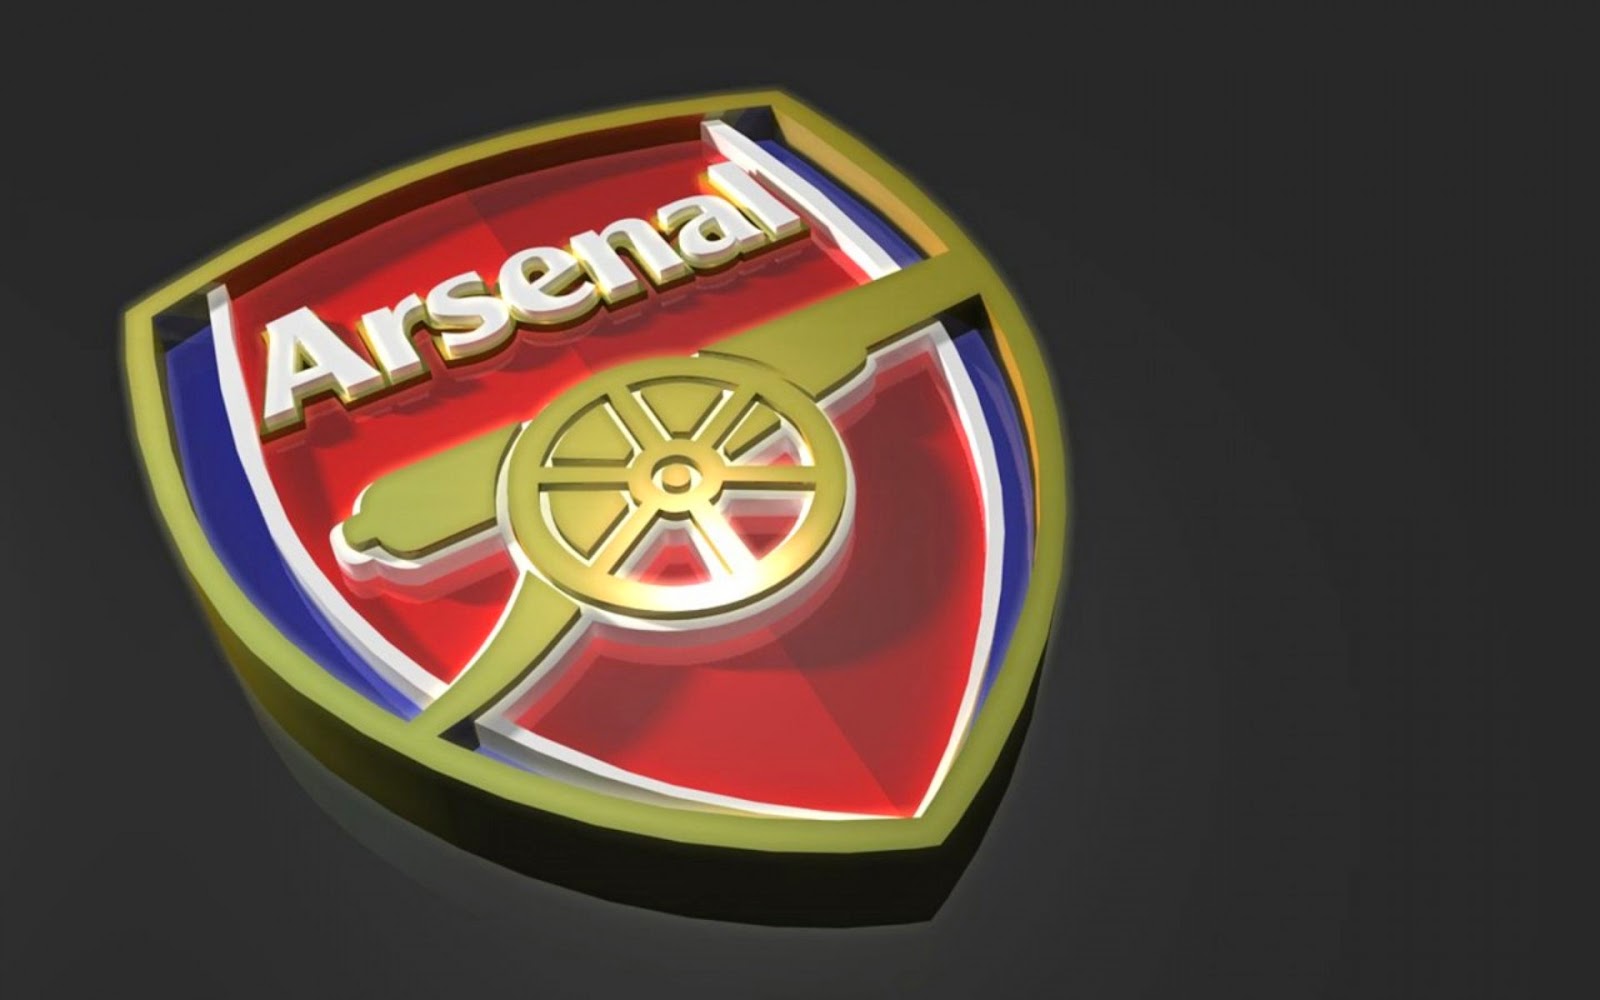 Arsenal logo 1080P, 2K, 4K, 5K HD wallpapers free download | Wallpaper Flare